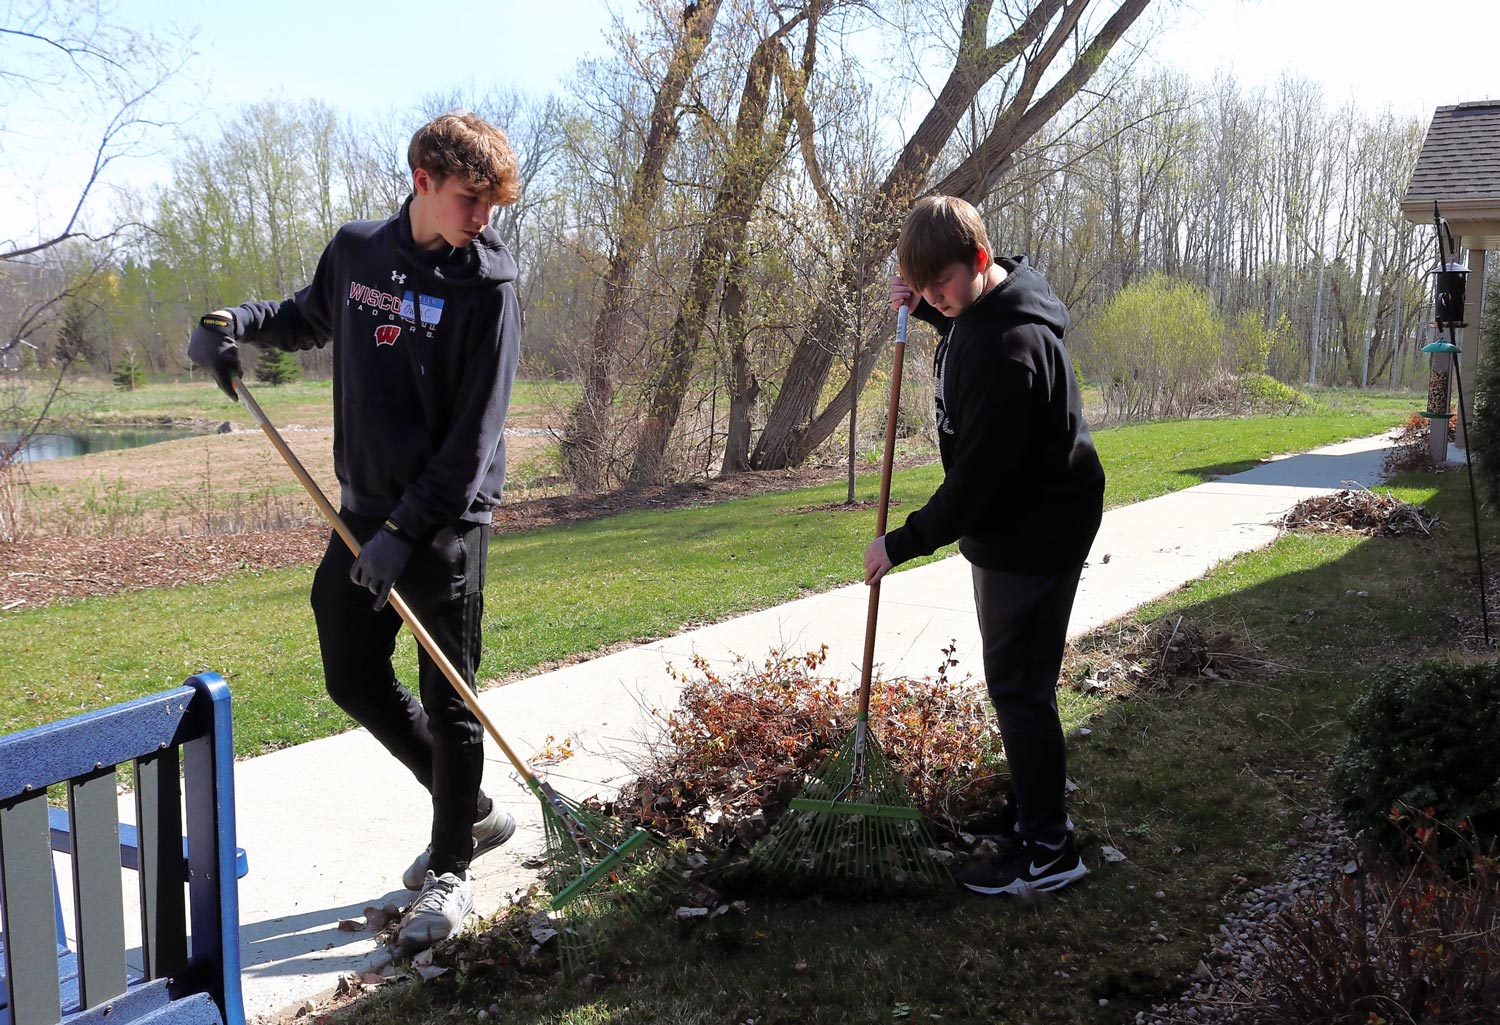 2 students raking